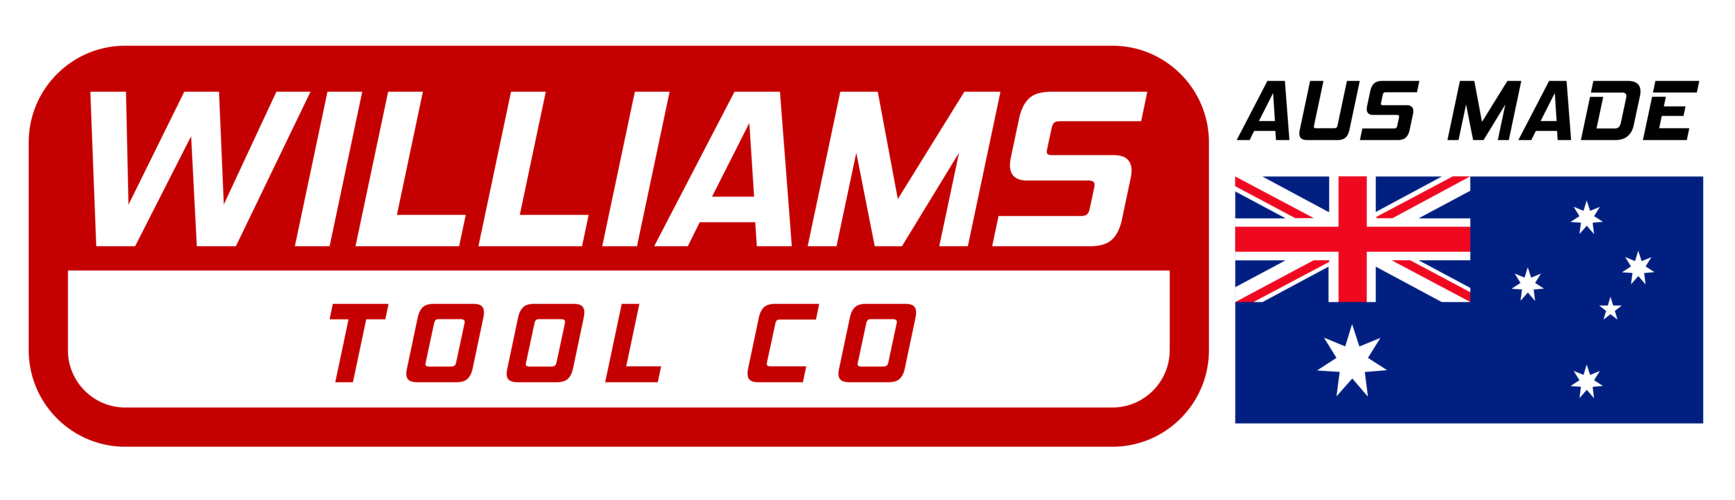 Williams Tool Co